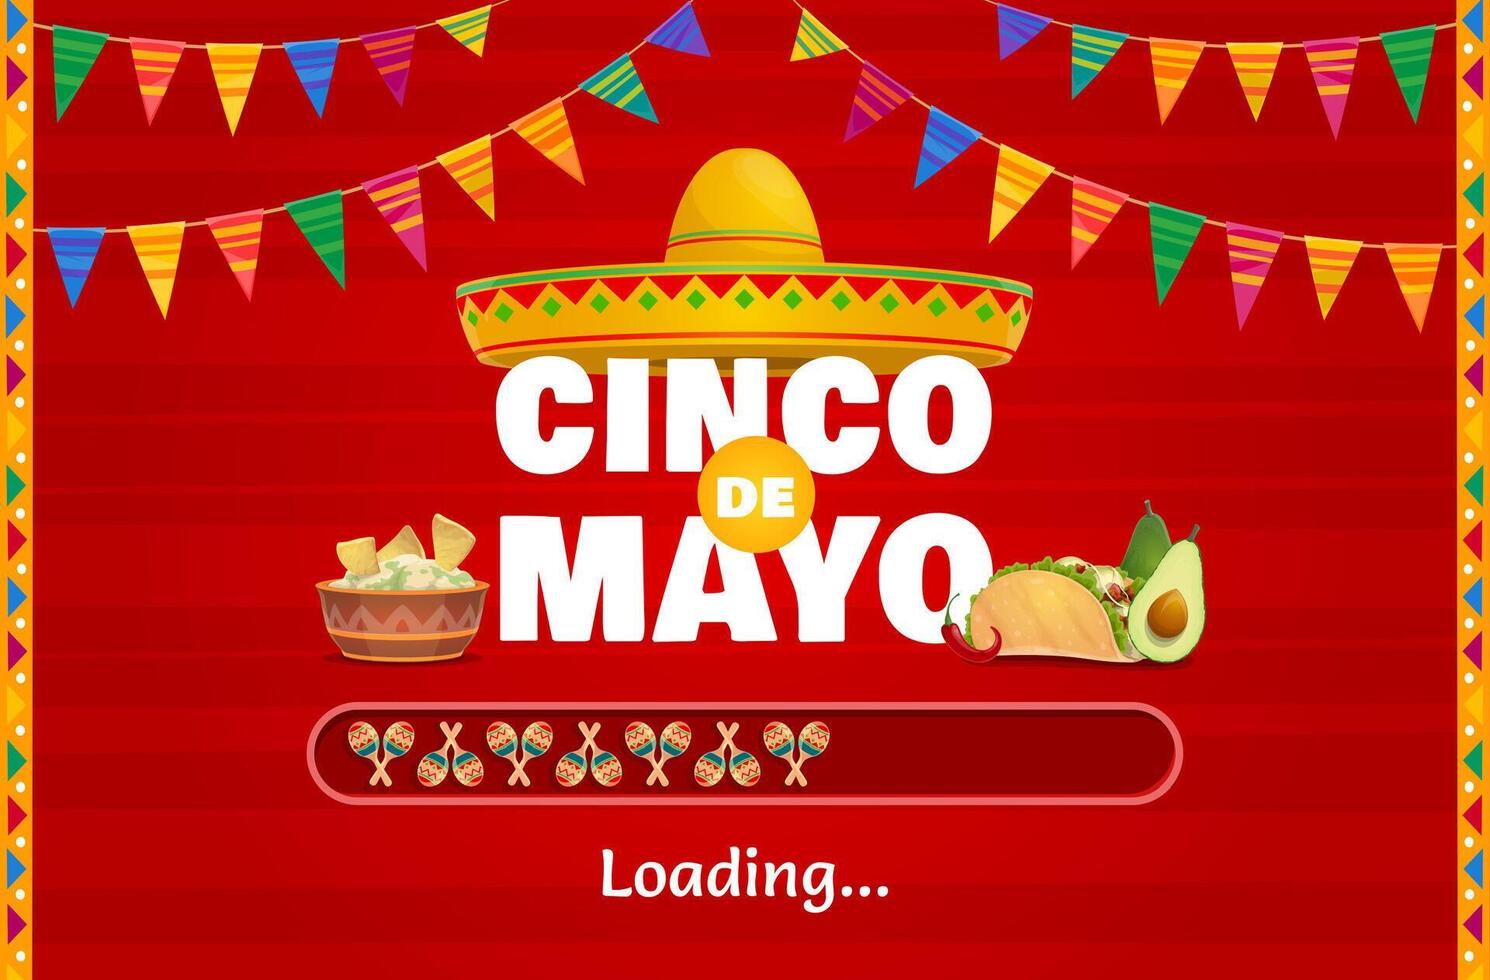 Cinco de mayo mexican holiday loading bar, scale vector